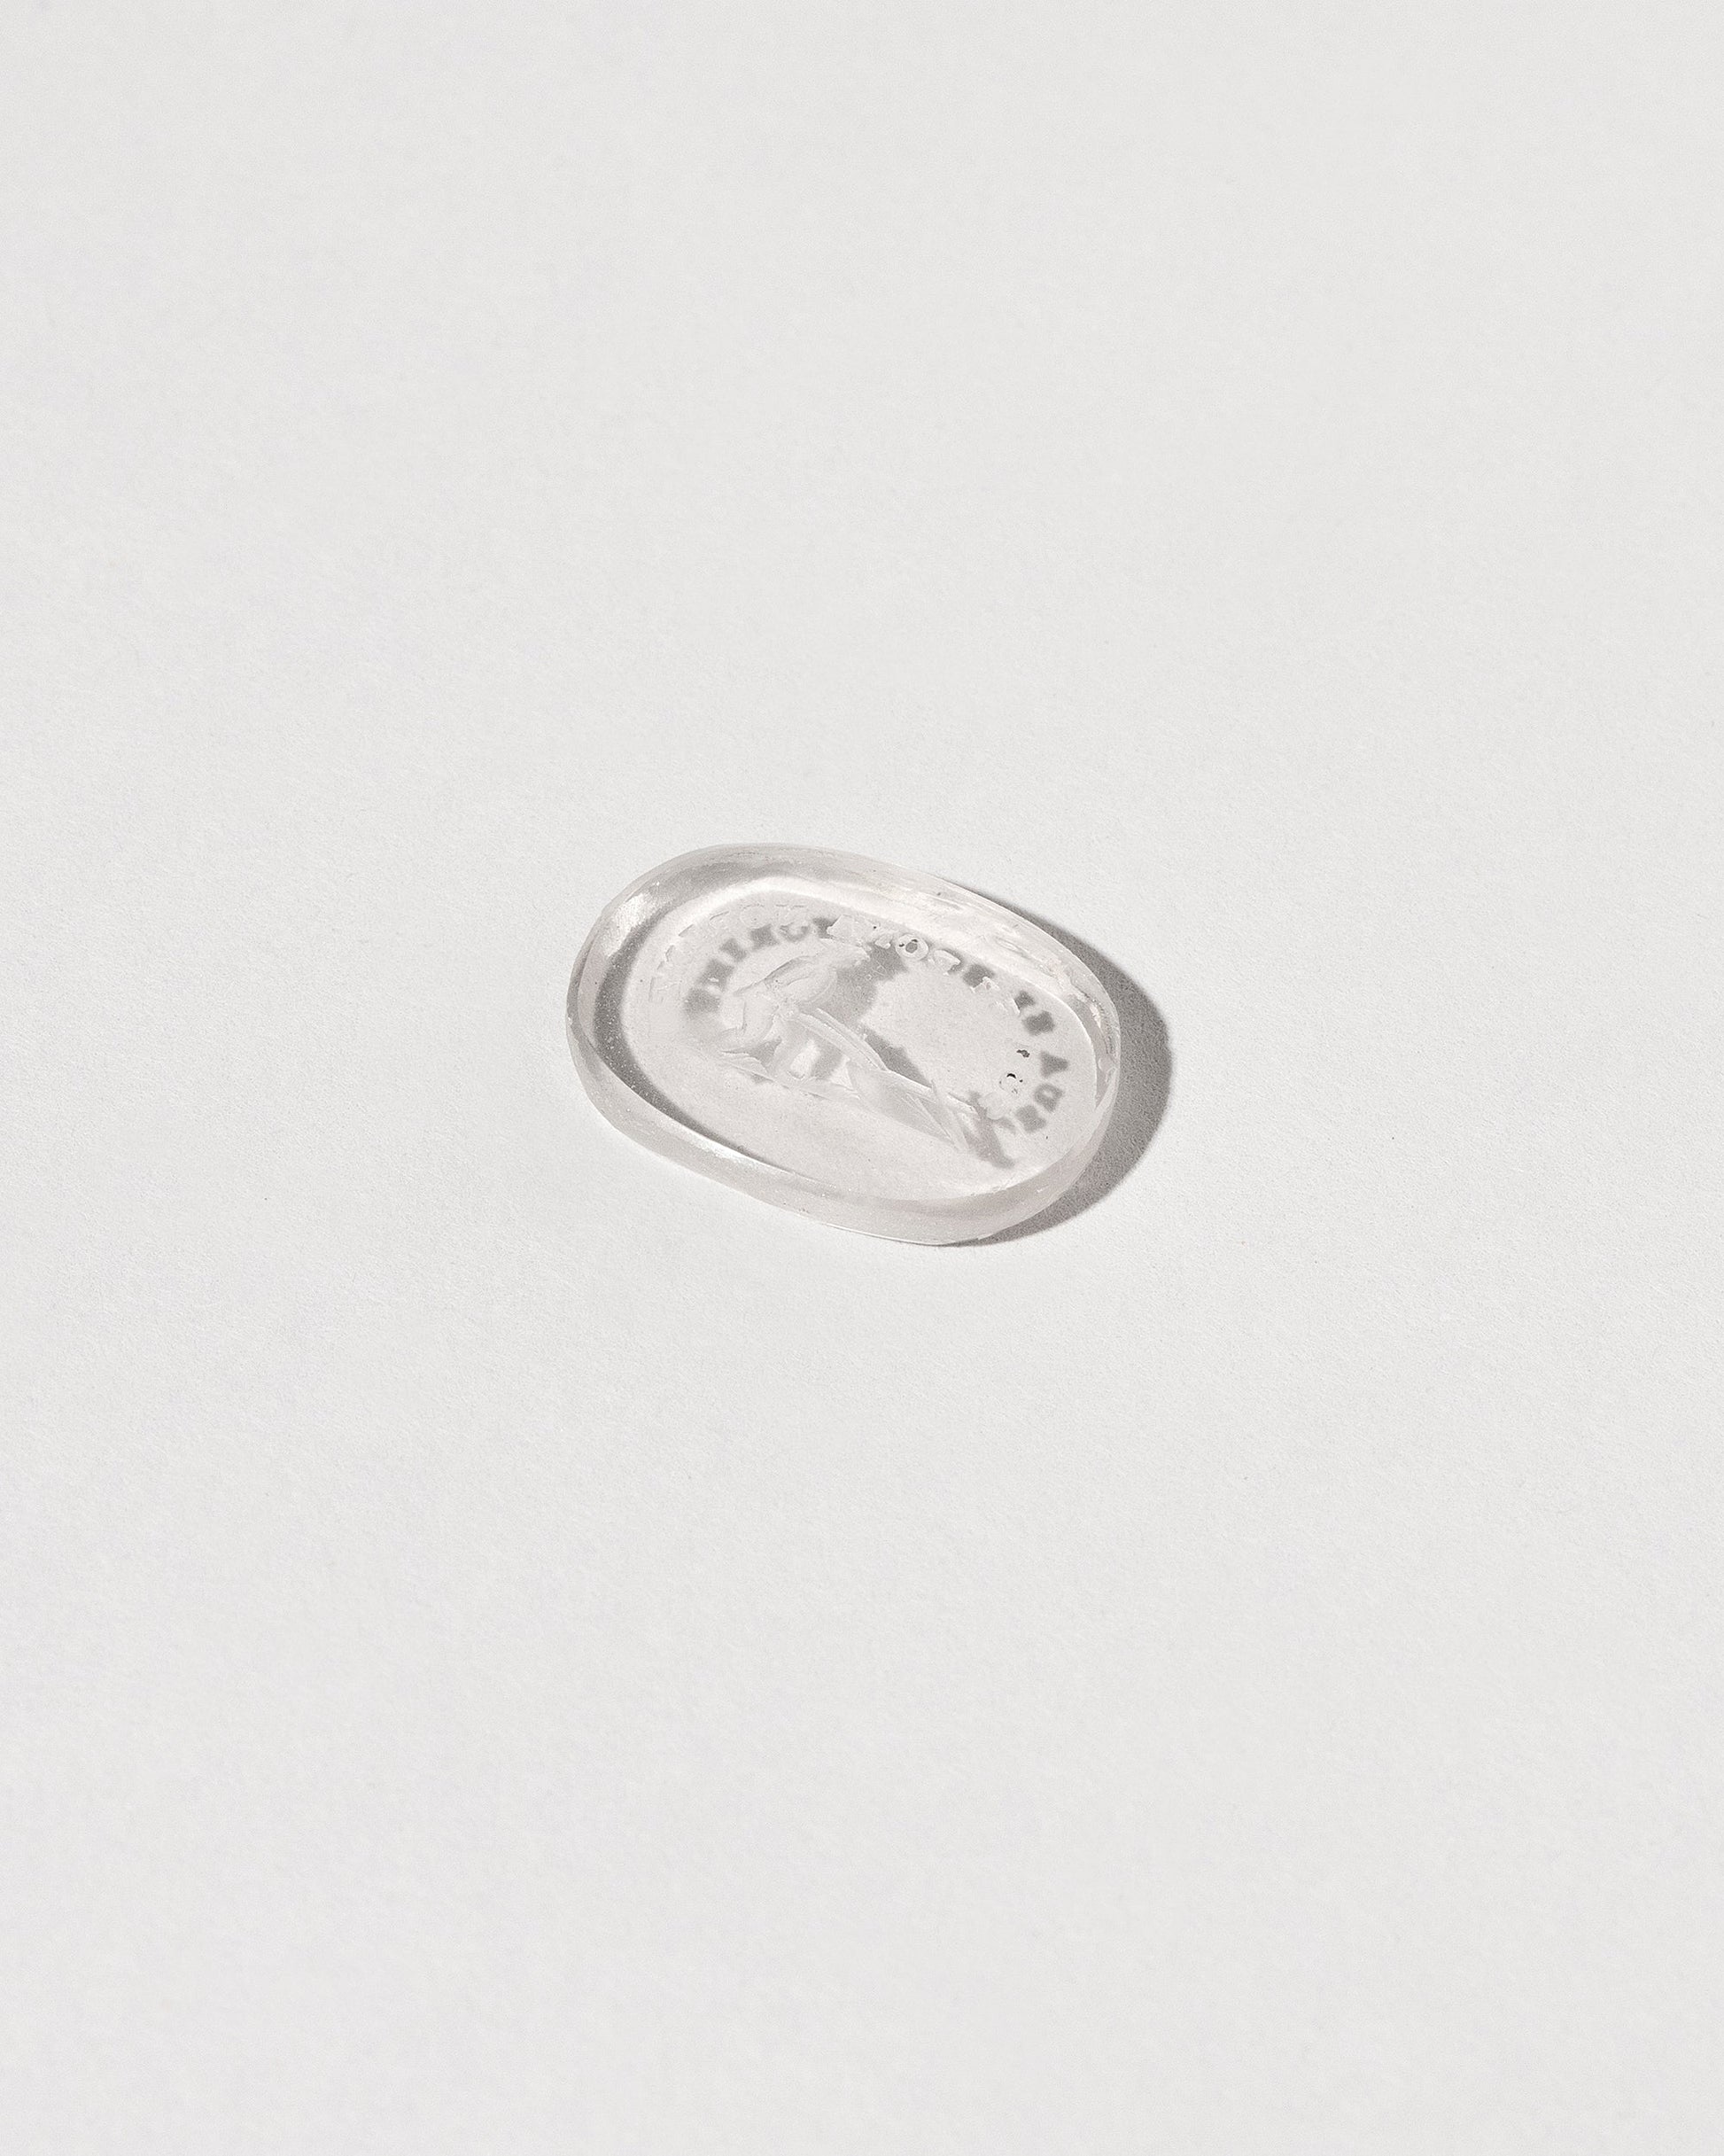  Simplicity Intaglio Seal on light color background.